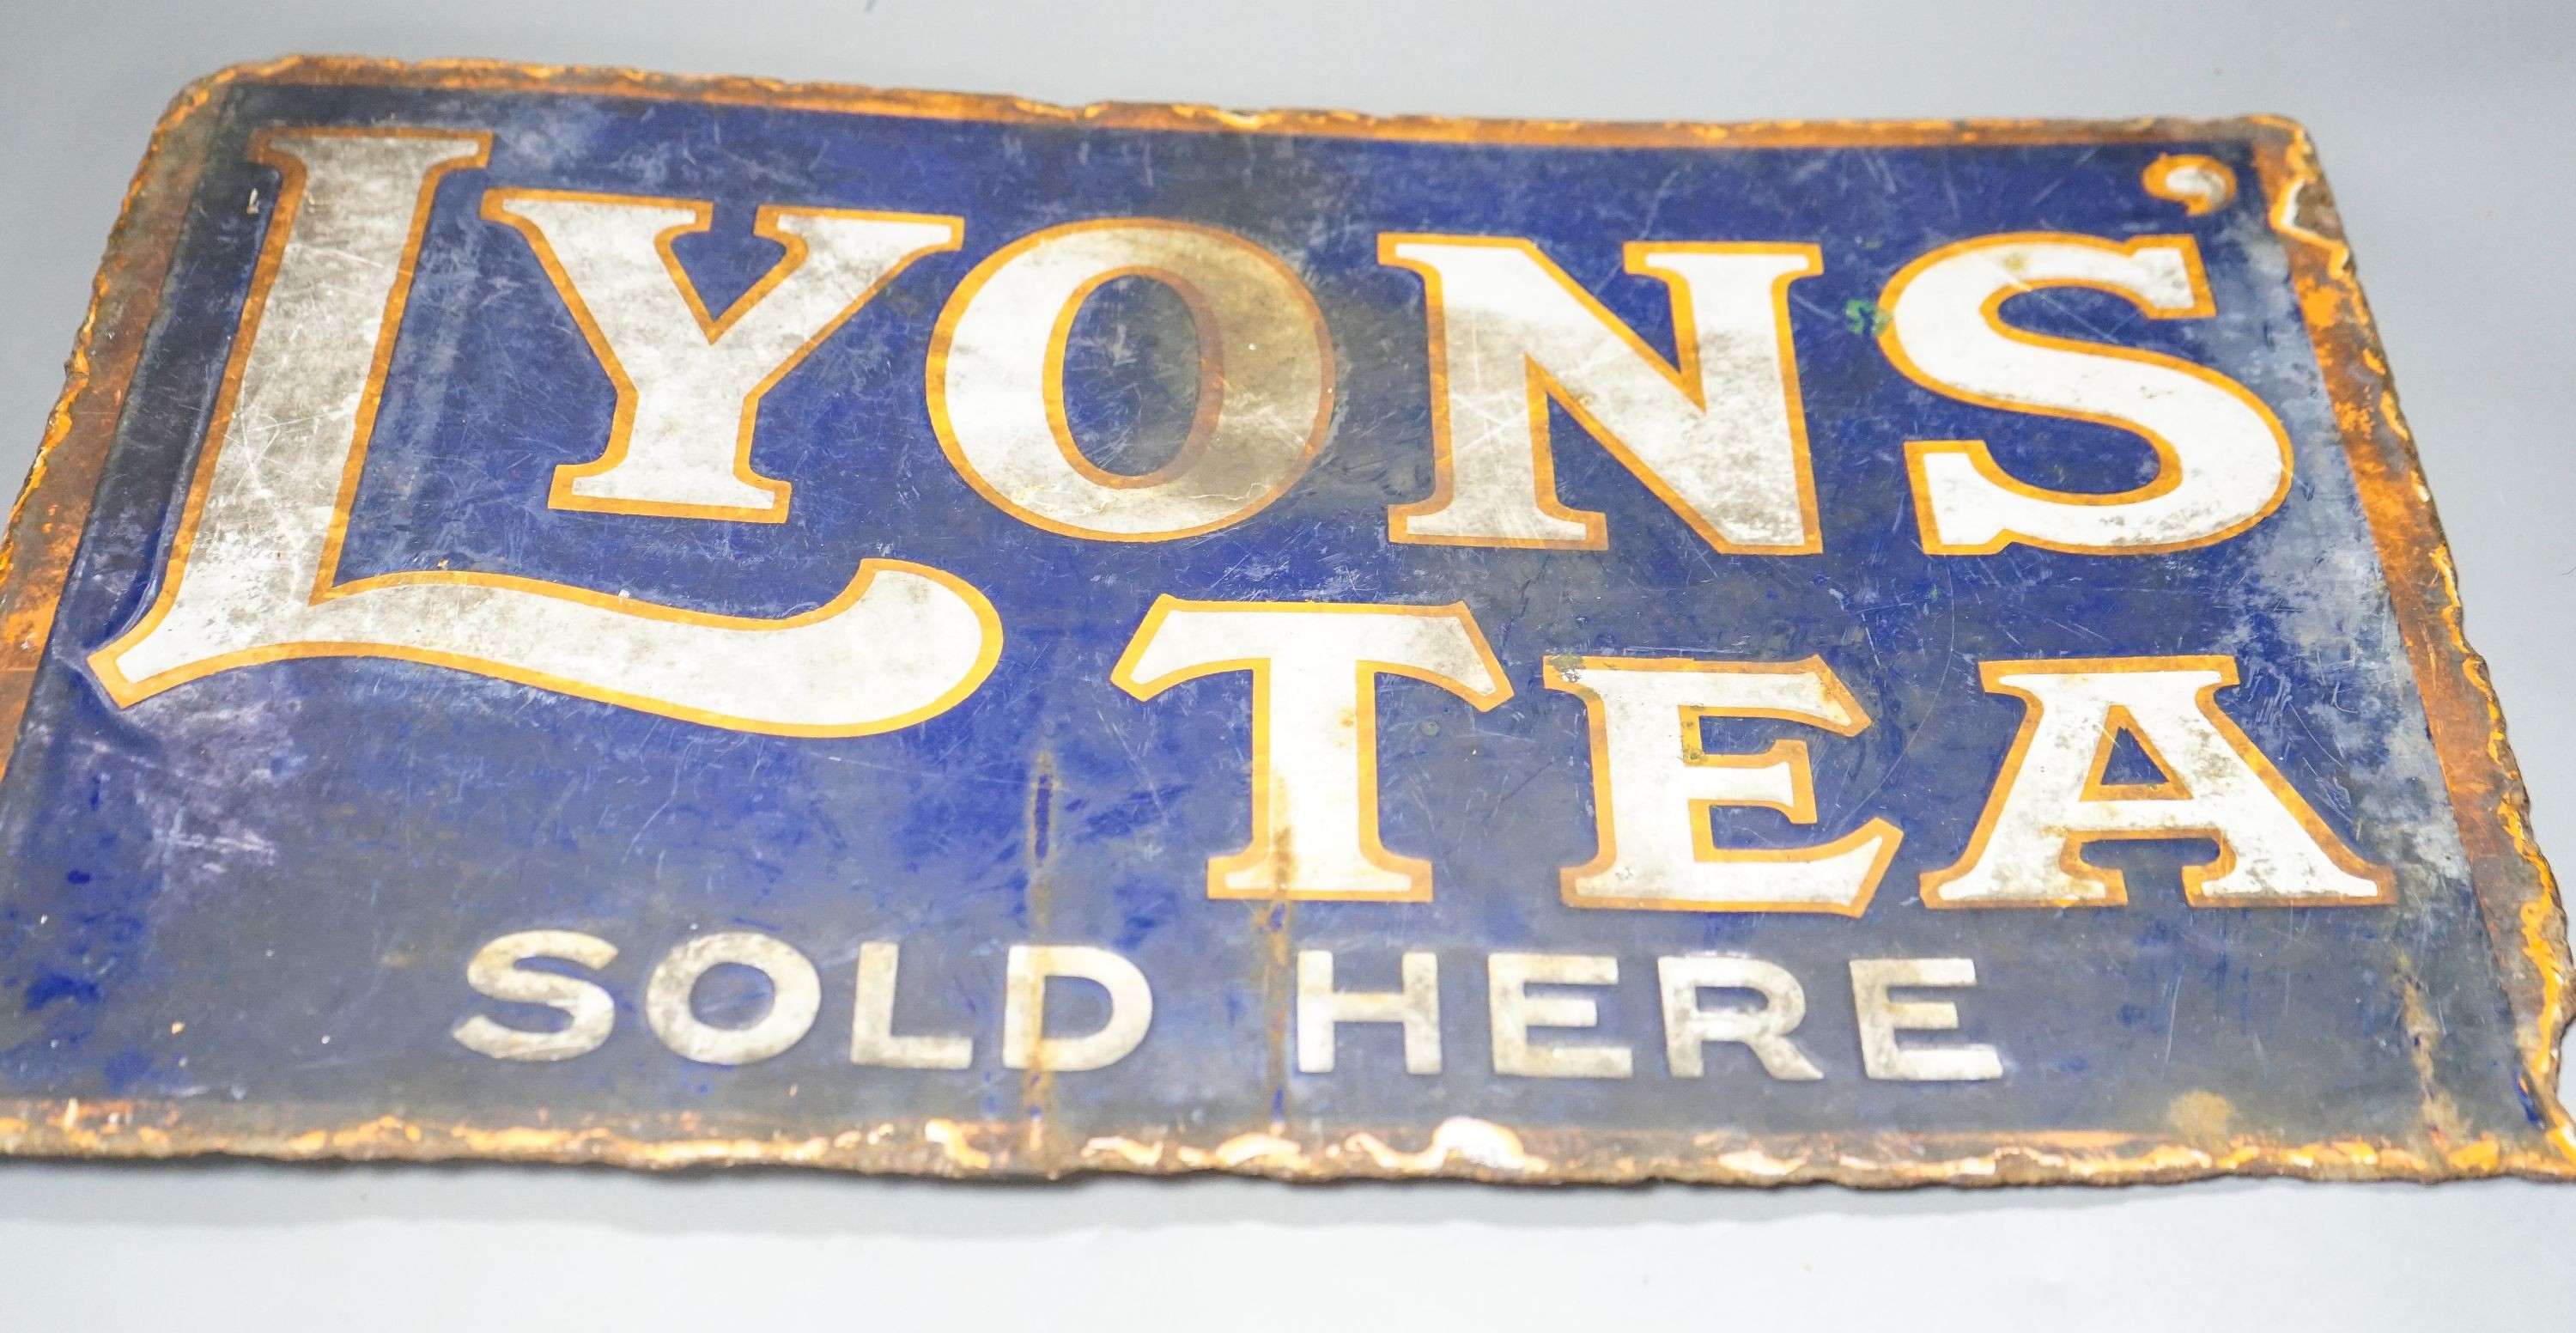 A Lyons Tea enamelled sign30x46cm - Image 2 of 2